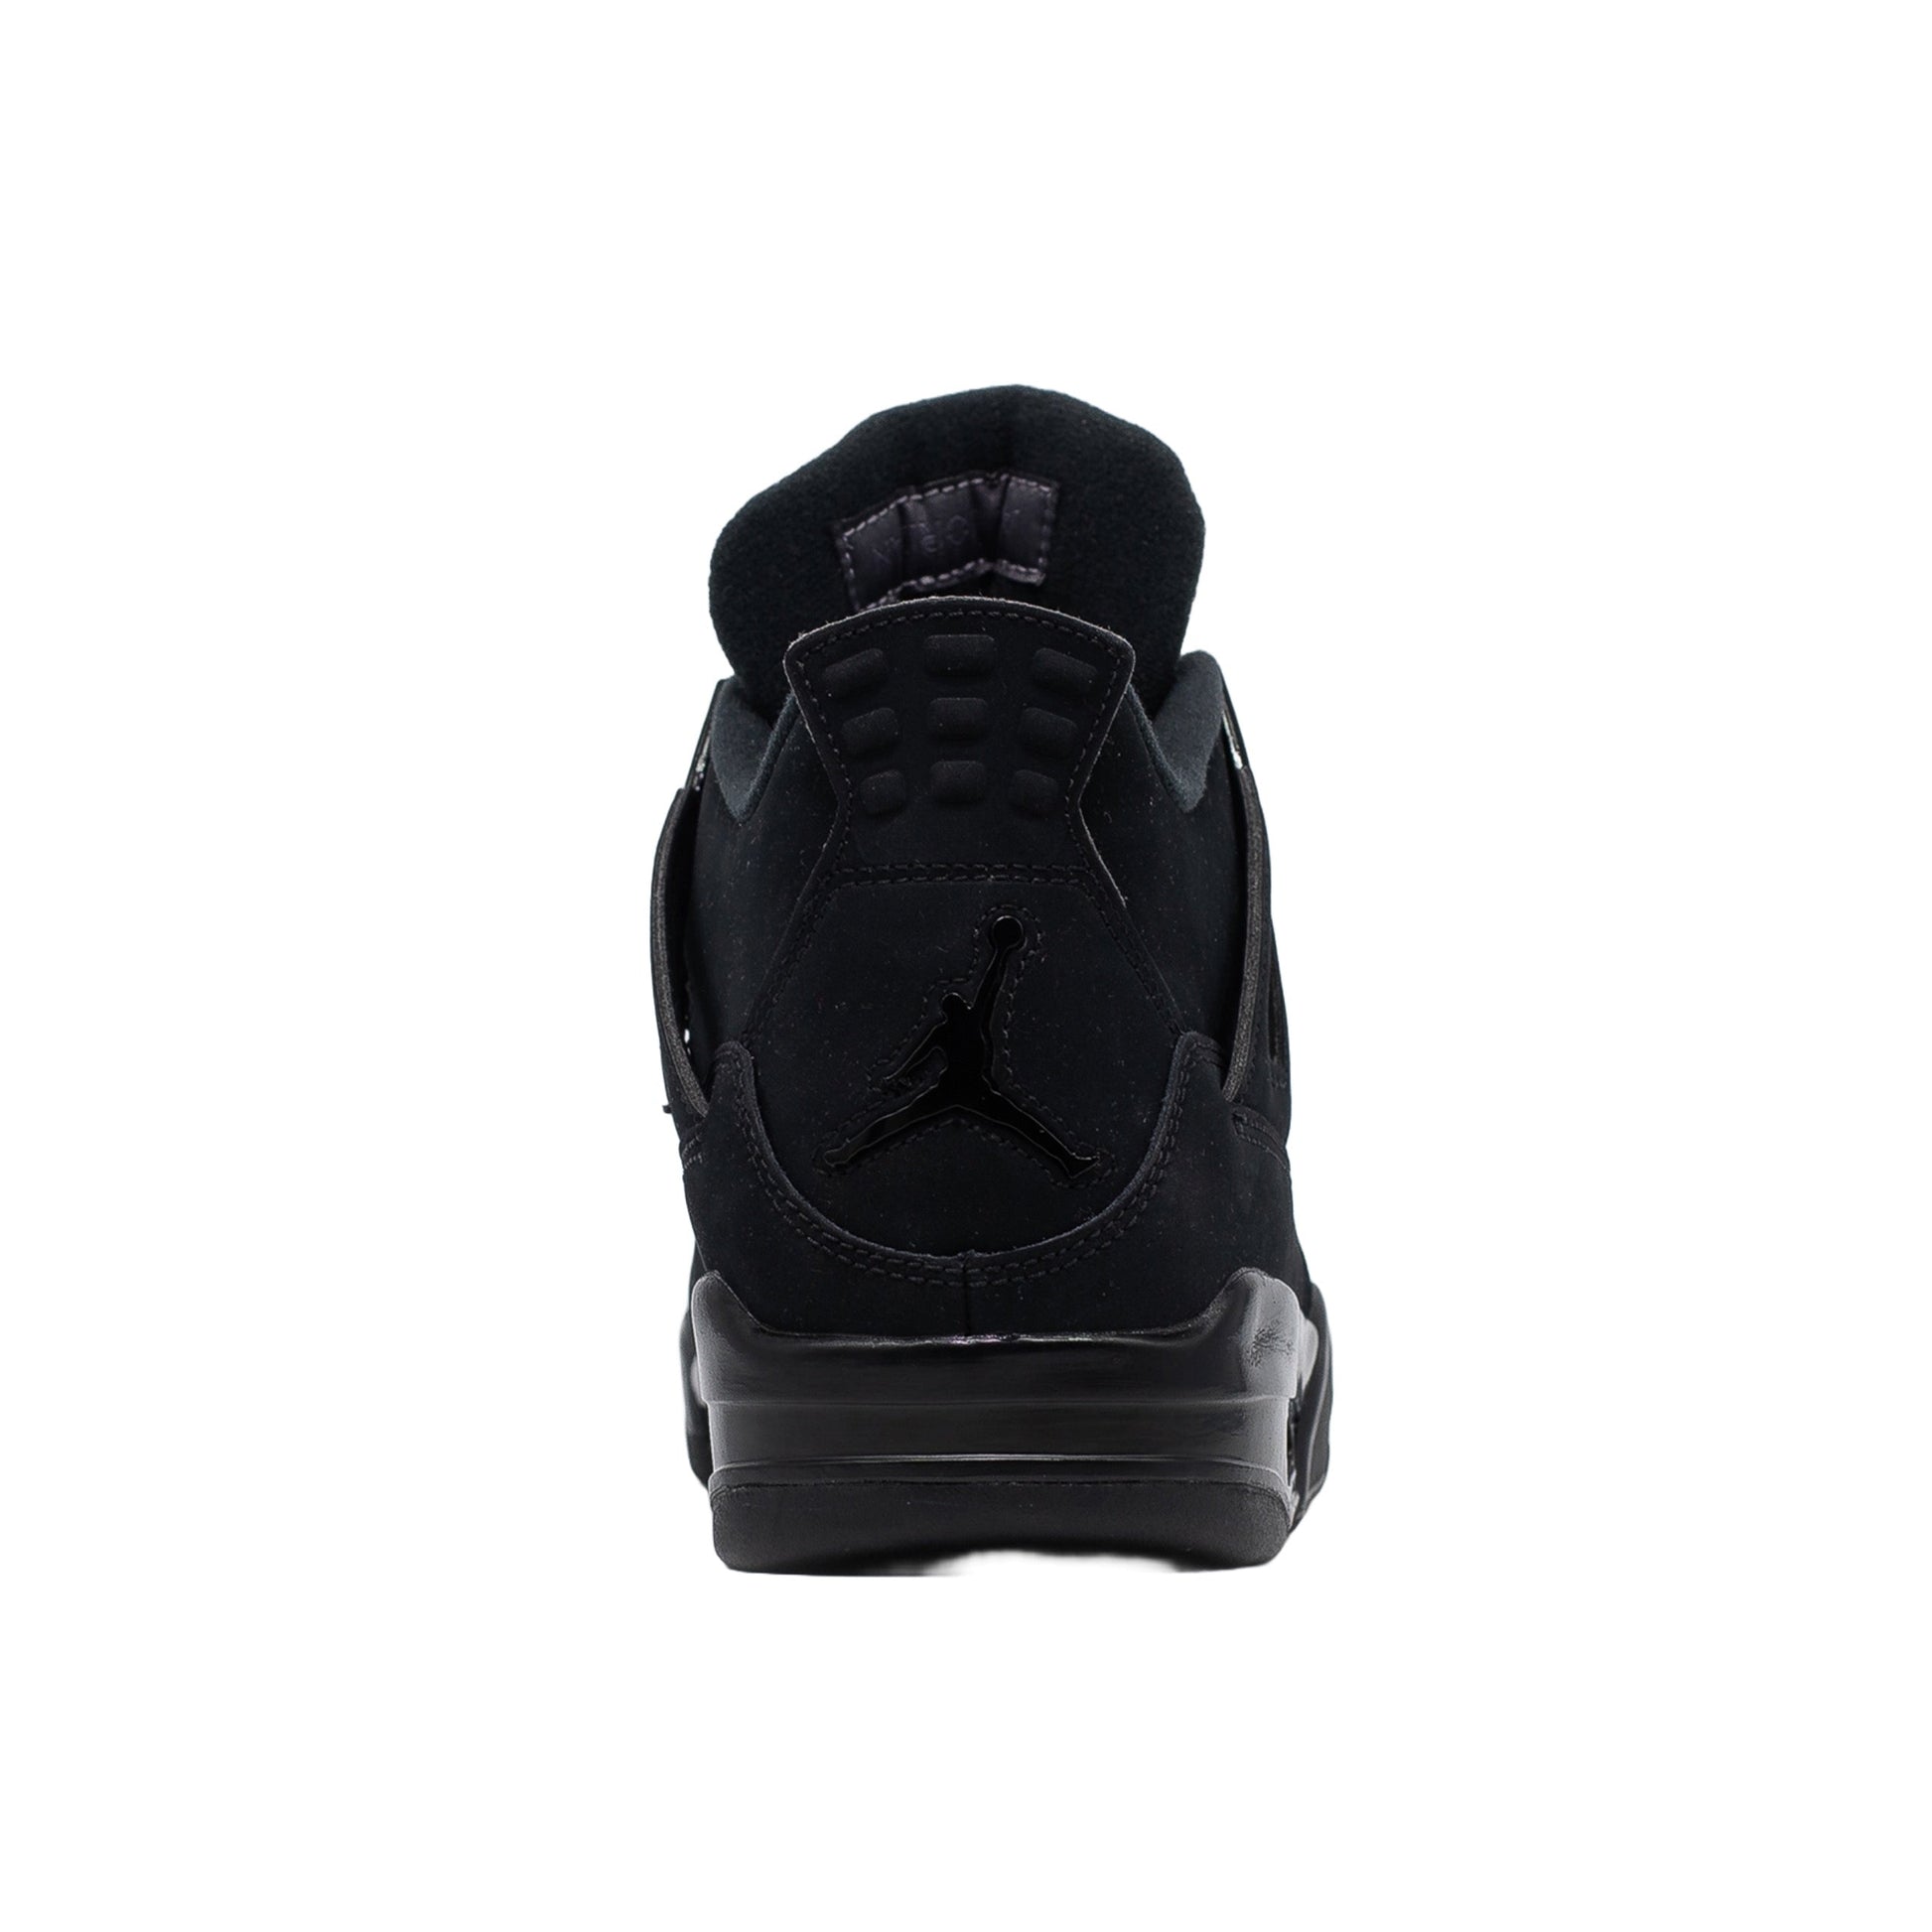 Air Jordan 4, Black Cat (2020)